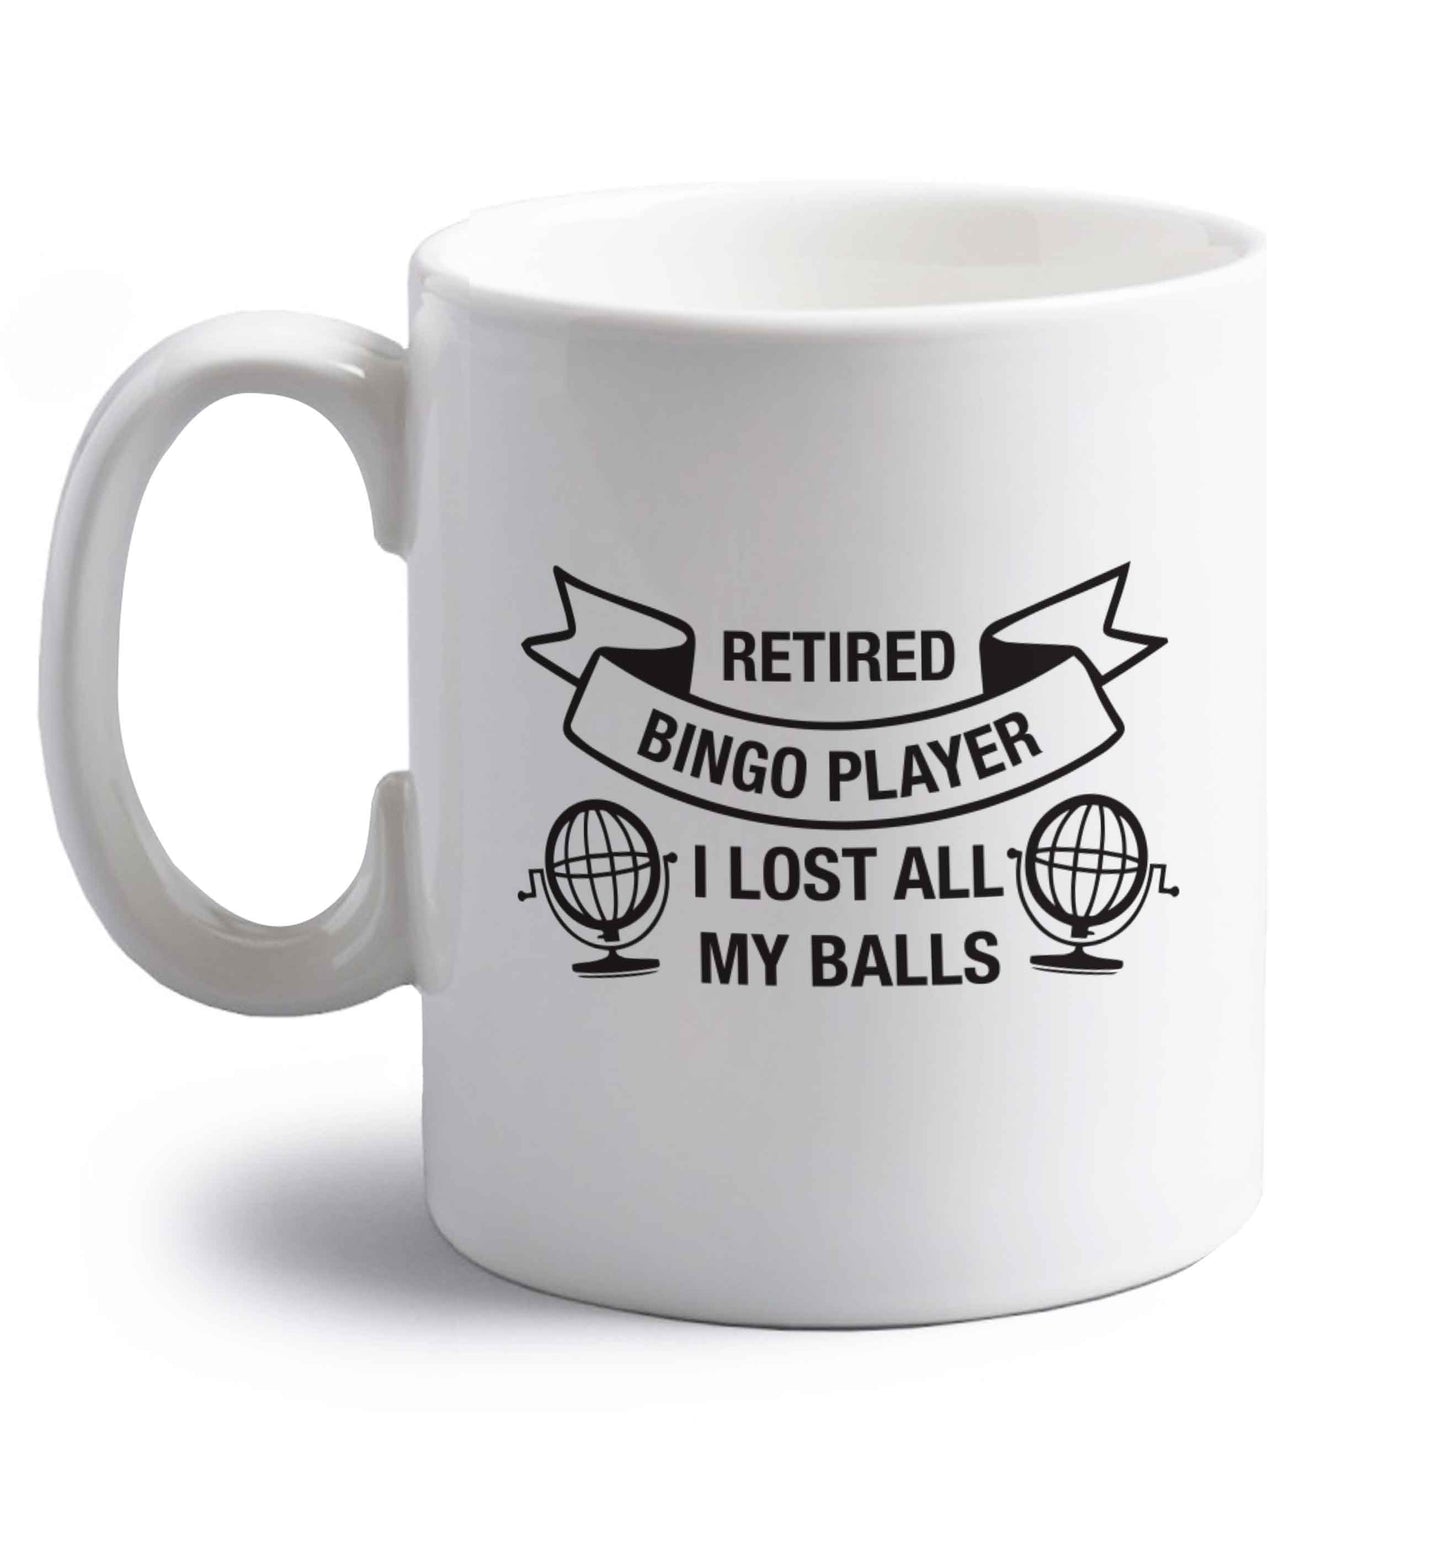 Retired bingo player I lost all my balls right handed white ceramic mug 